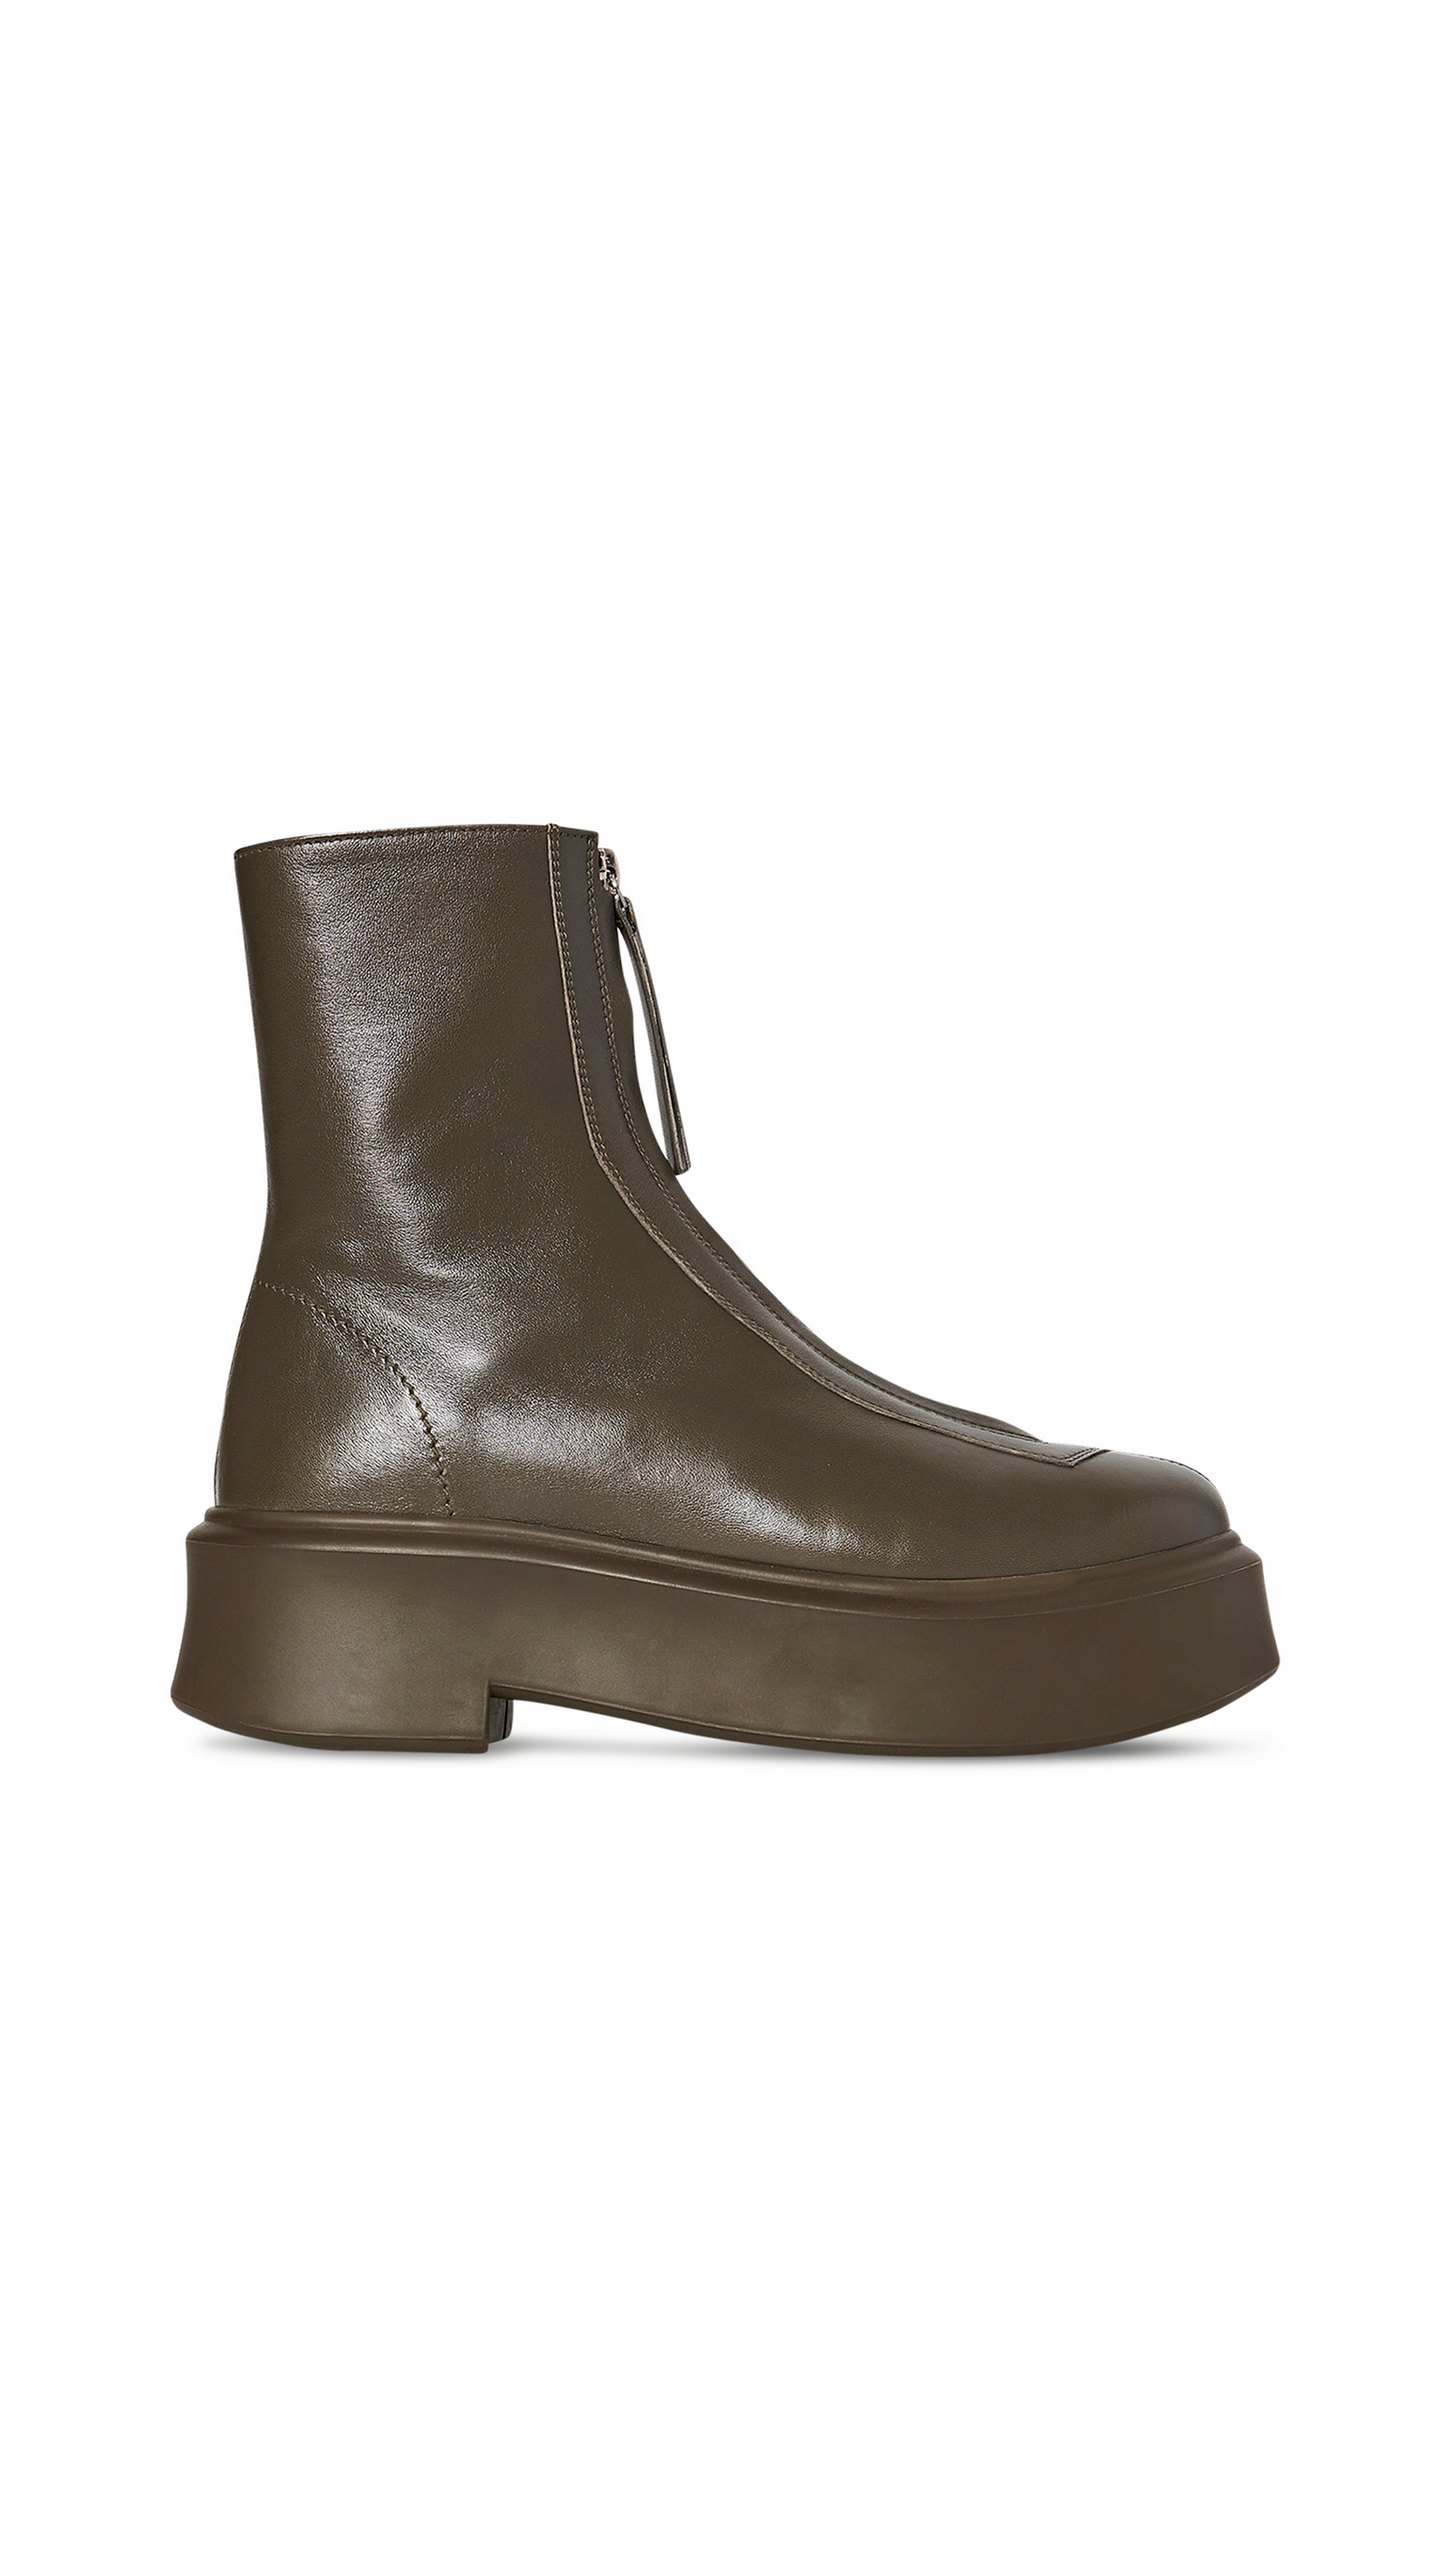 Zipped Boot I in Leather - Khaki Green